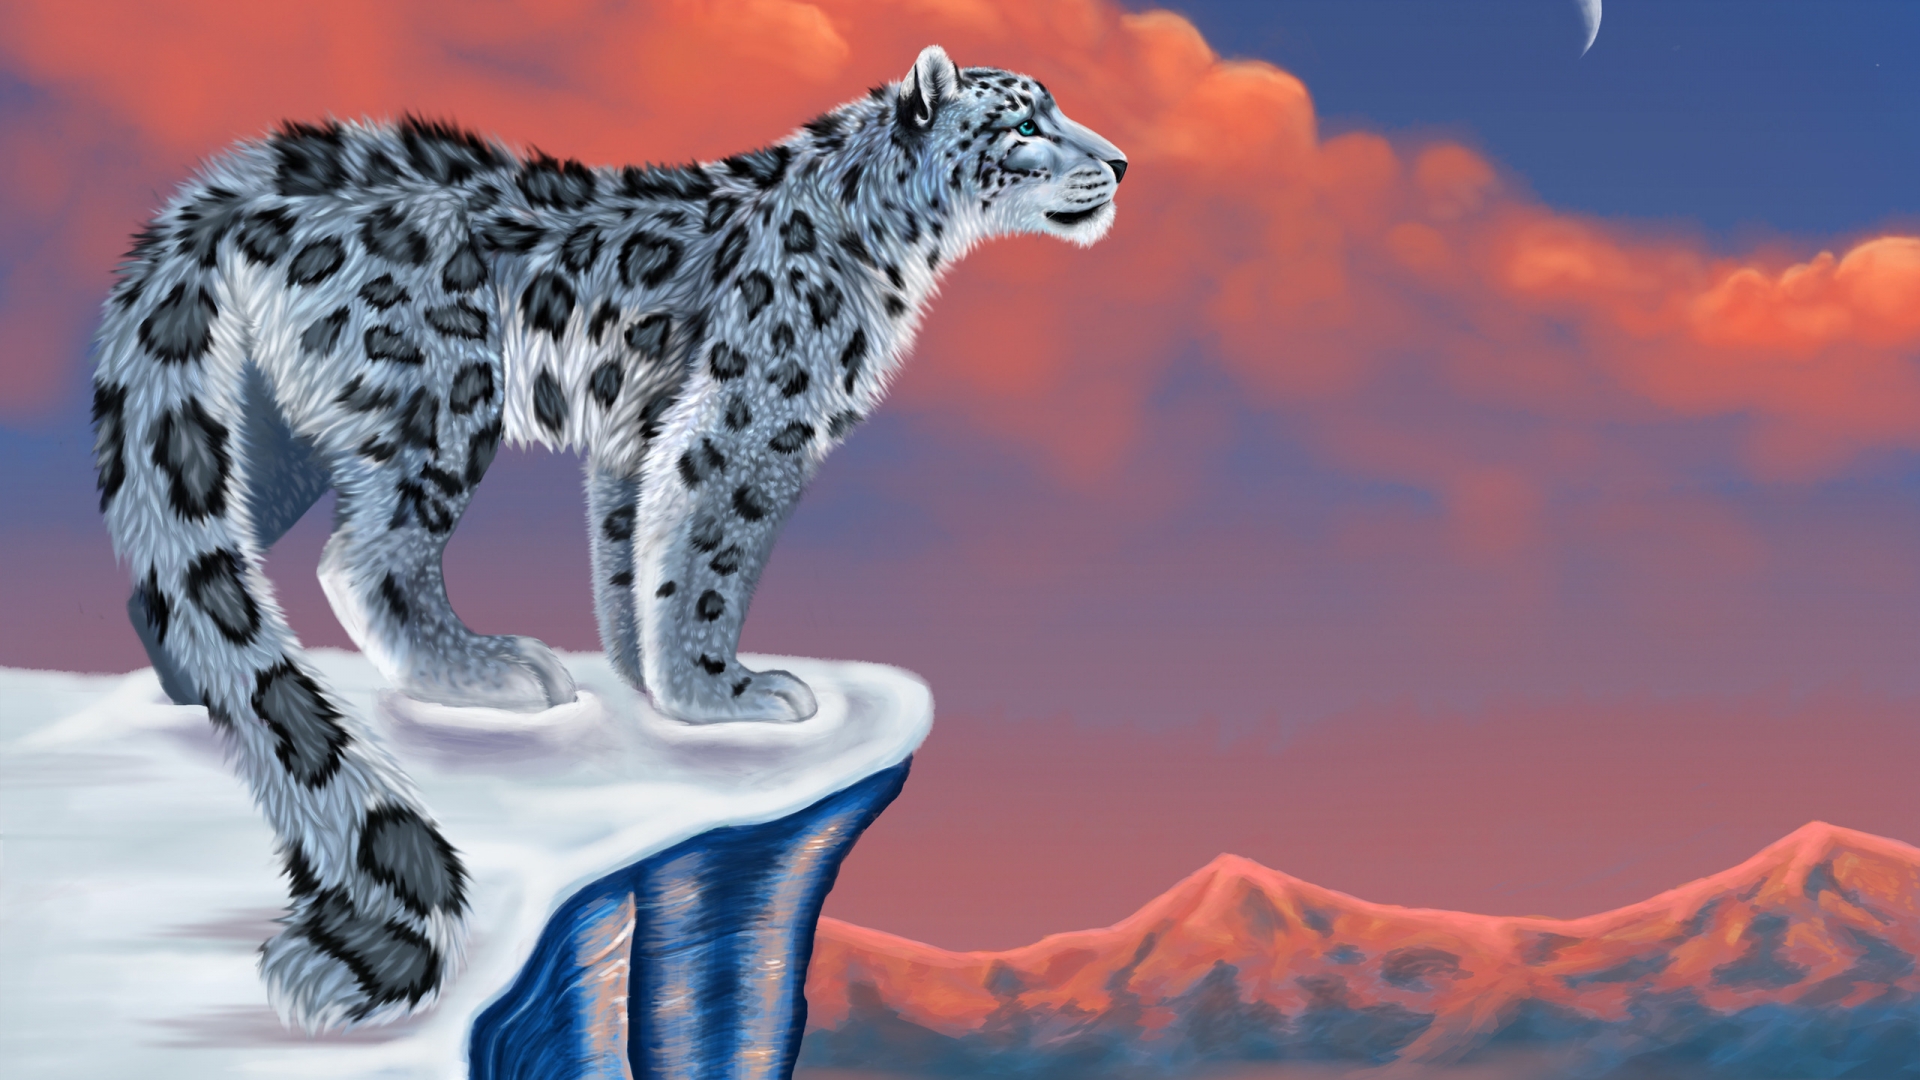 Animated Animal Hd Wallpapers | Free HD Desktop Wallpapers ...